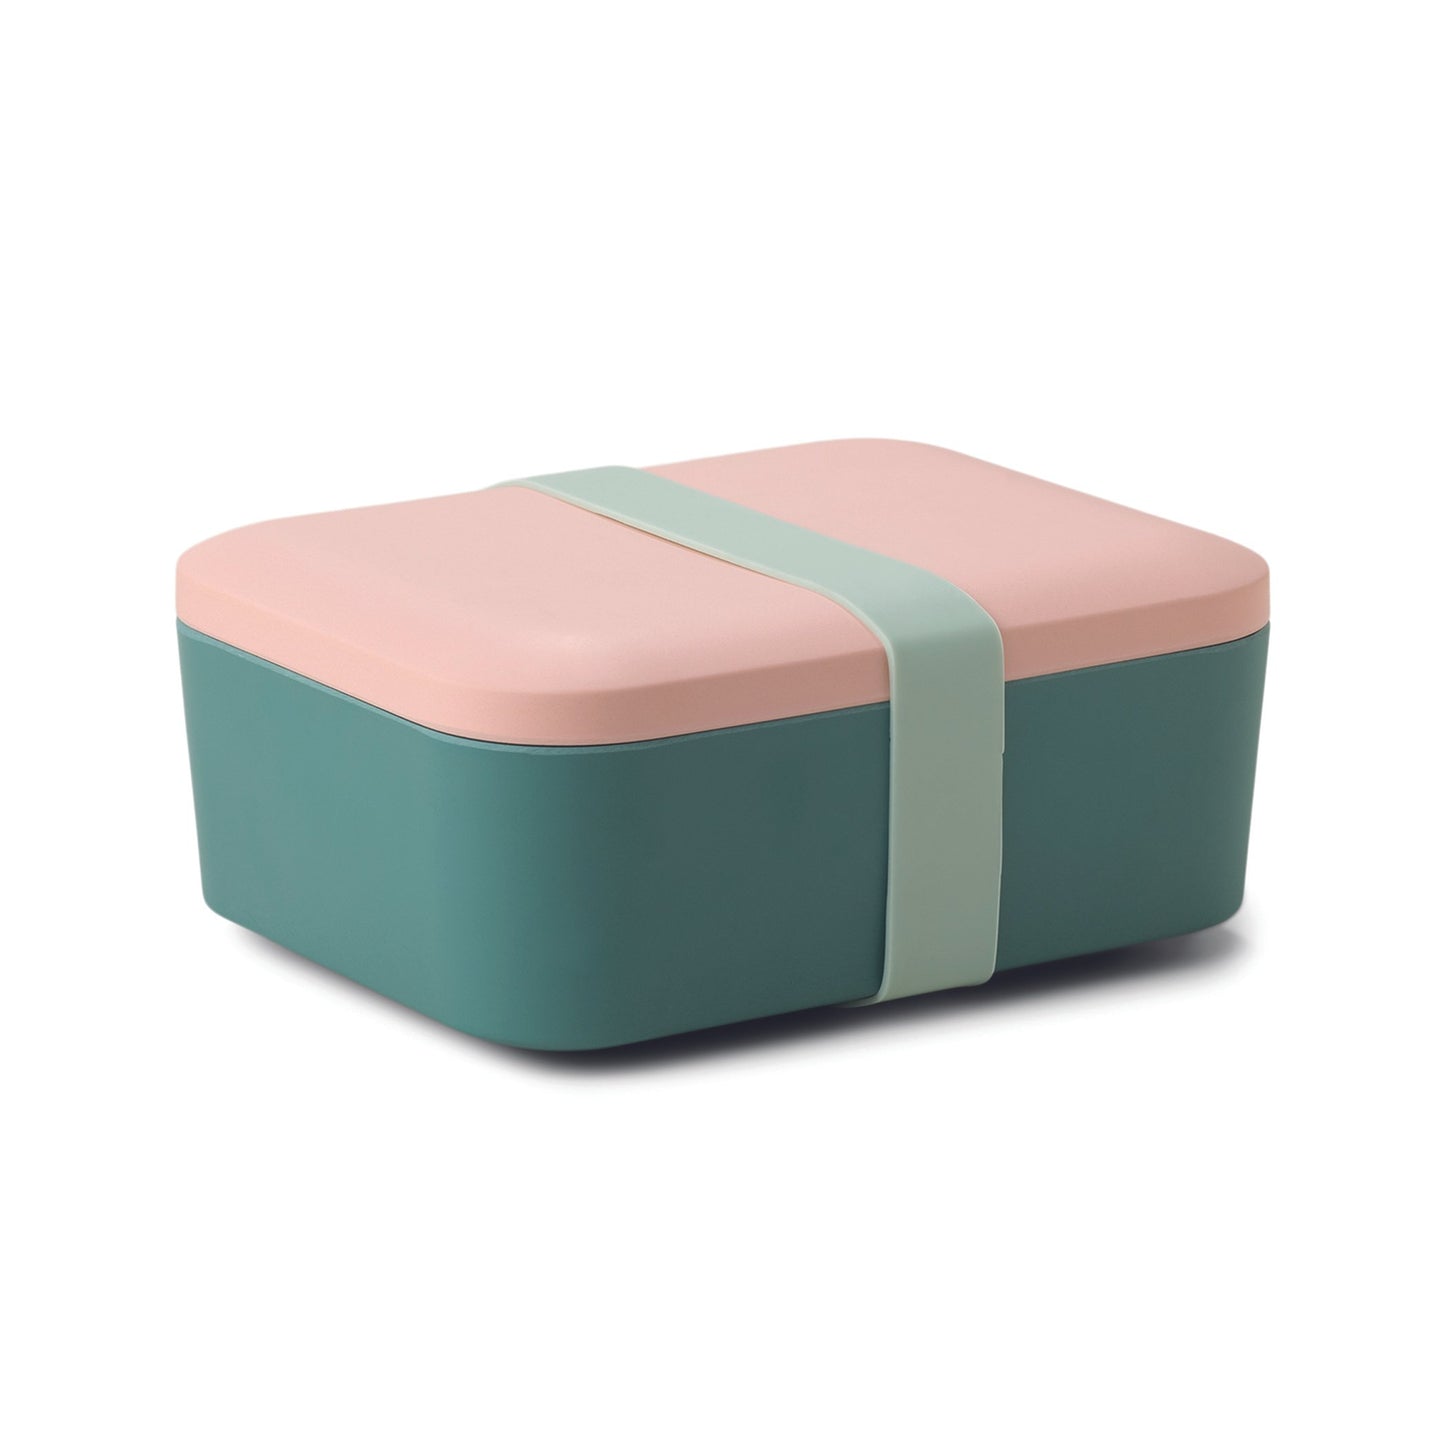 Melamine Lunch Box - Peachy/Hunter/Mint